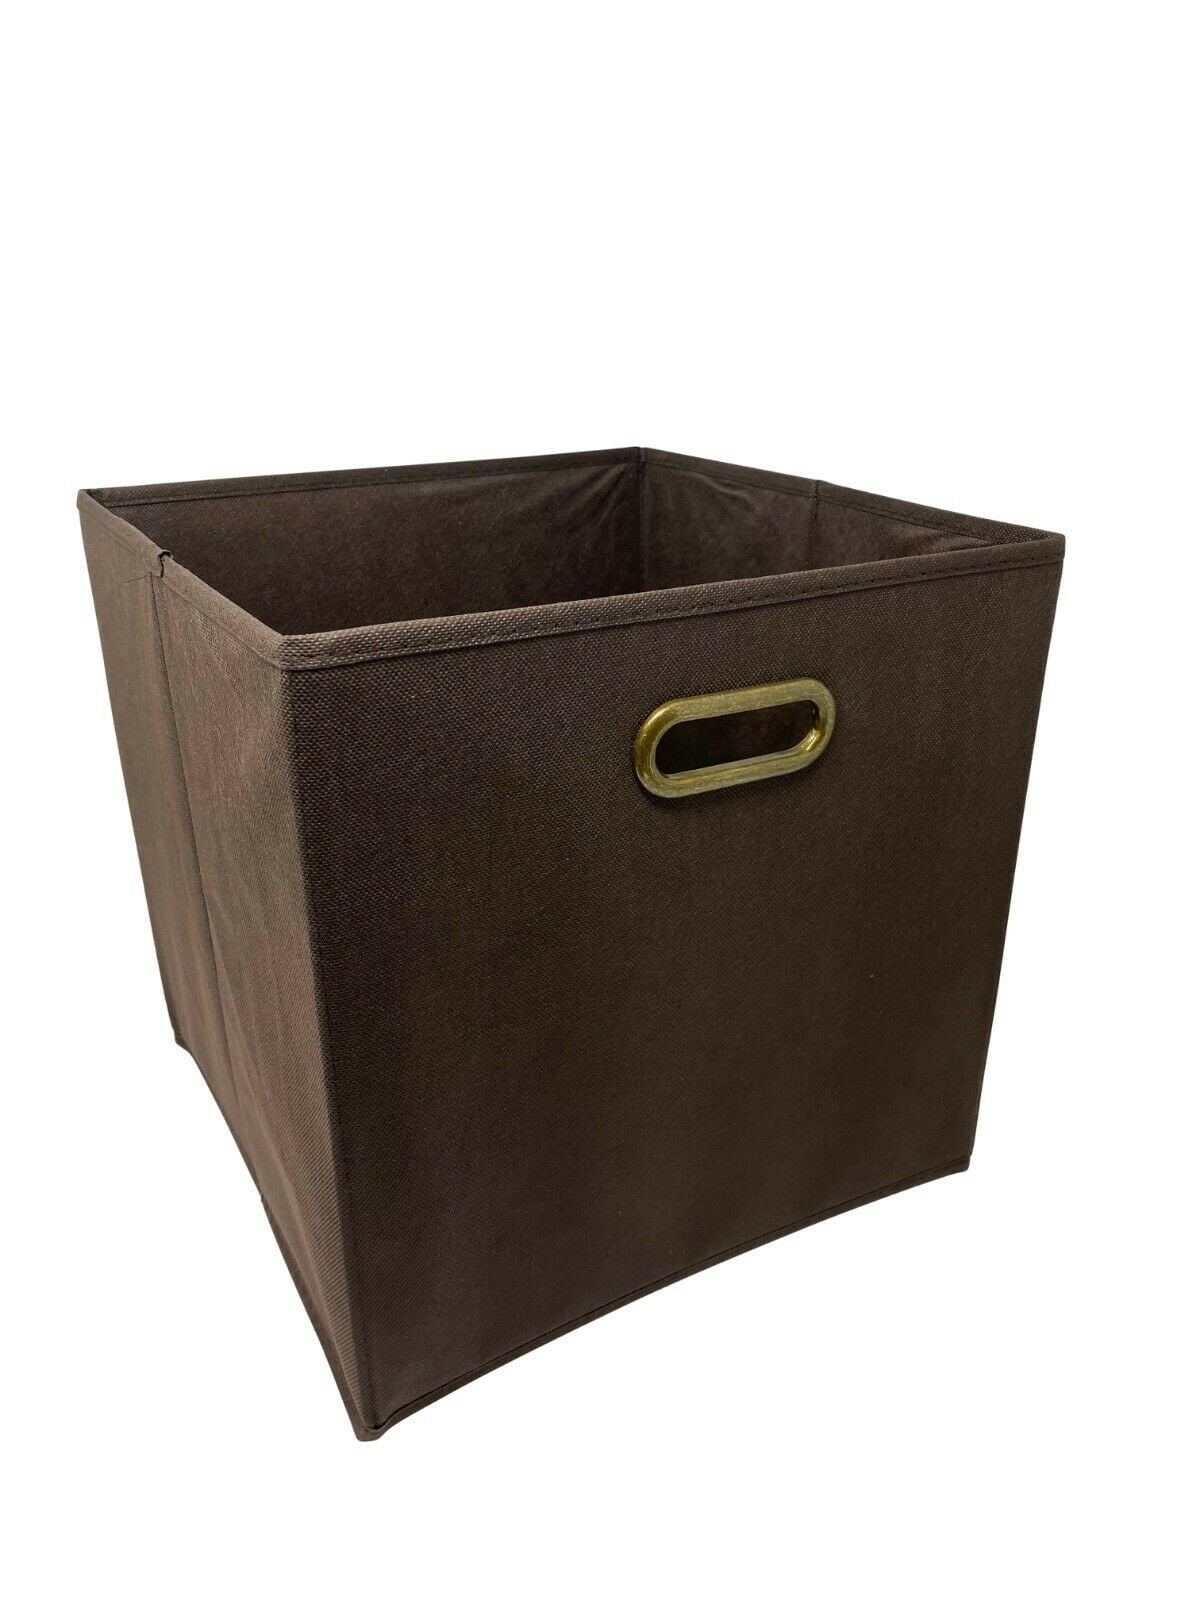 AbleHome Large 6 pack Fabric Storage Bins Box Organizer Cube Basket ...